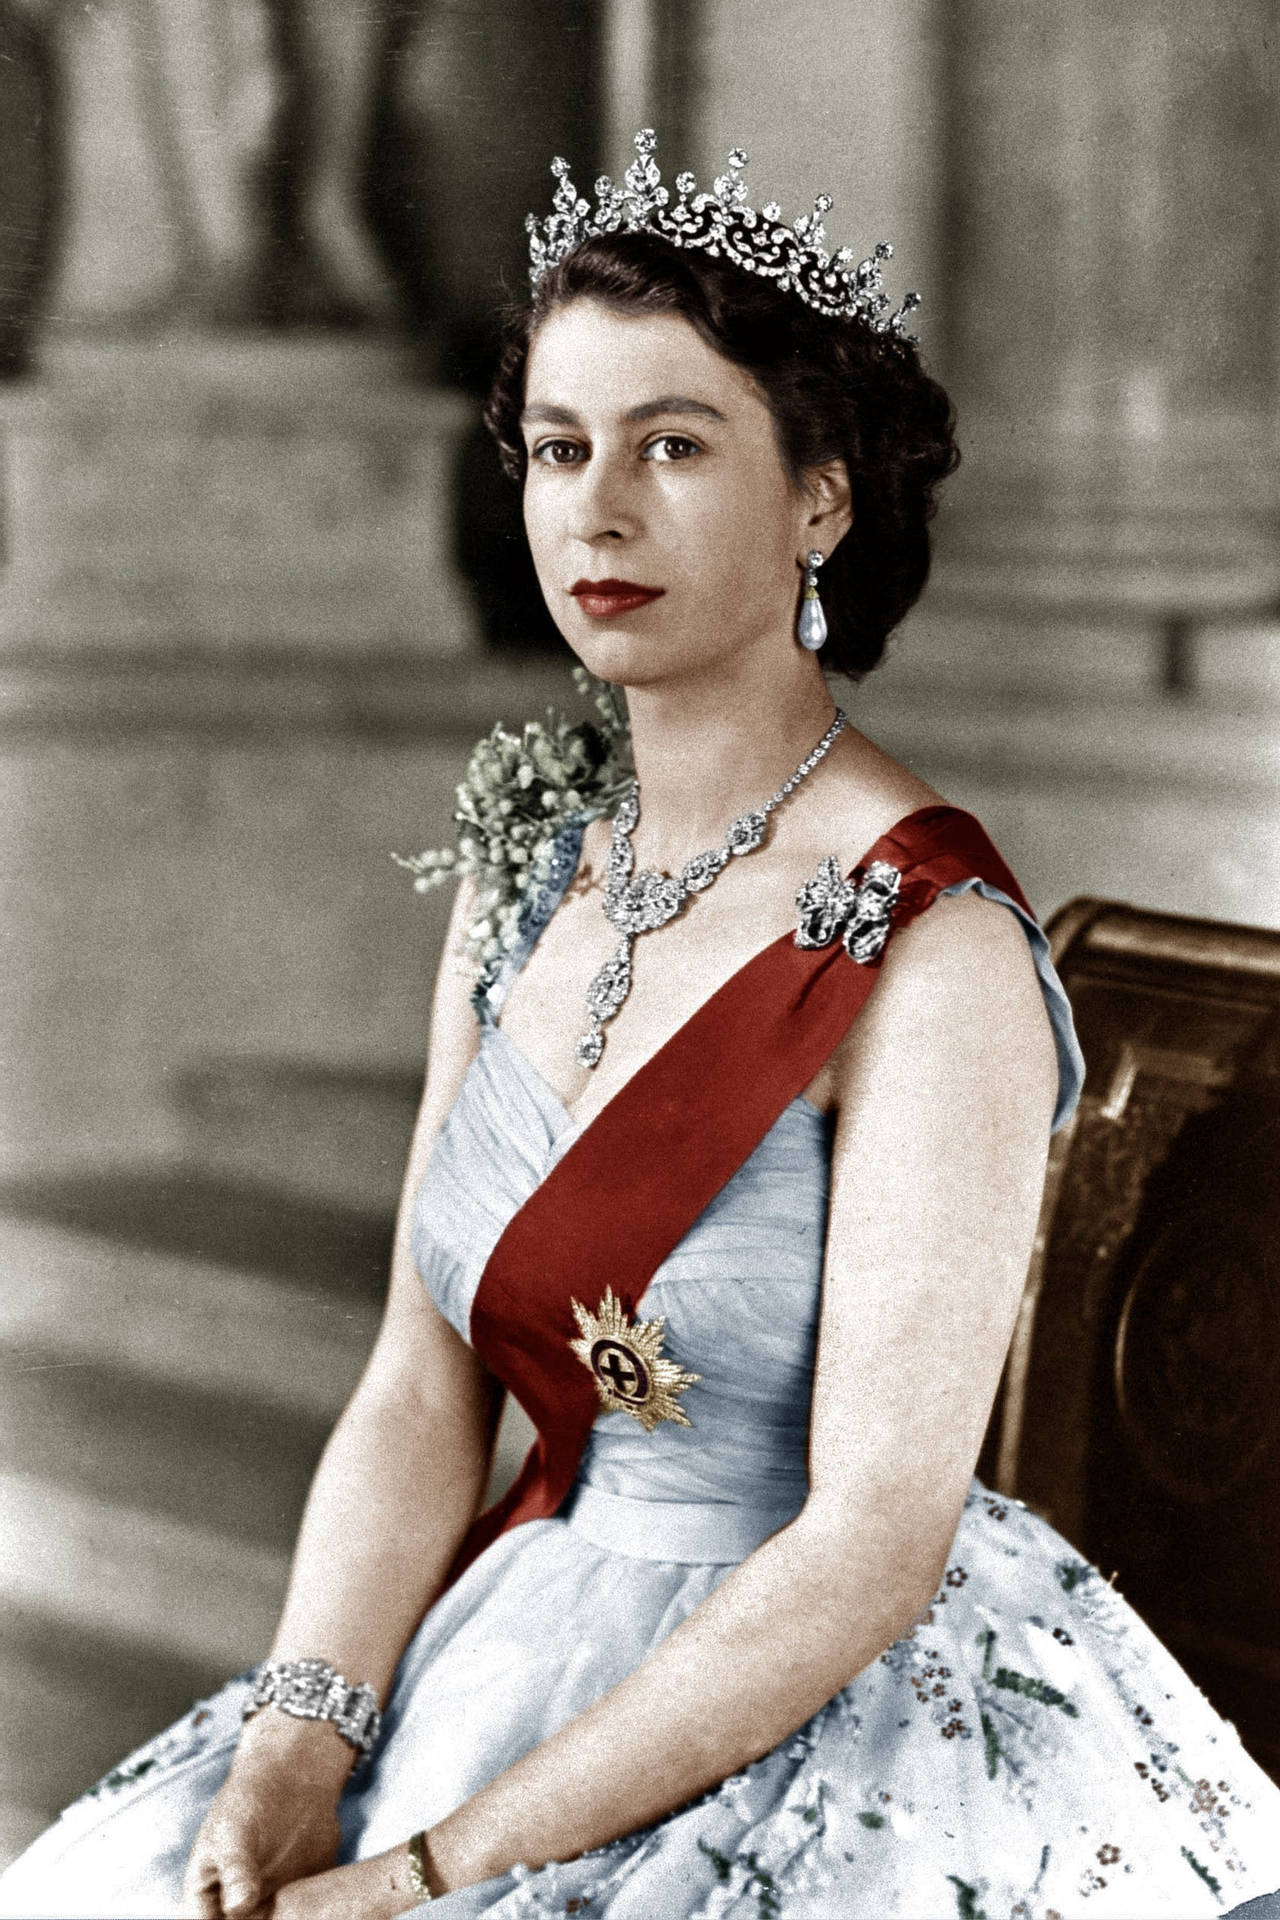 Queen Elizabeth Vintage Young Photograph Background